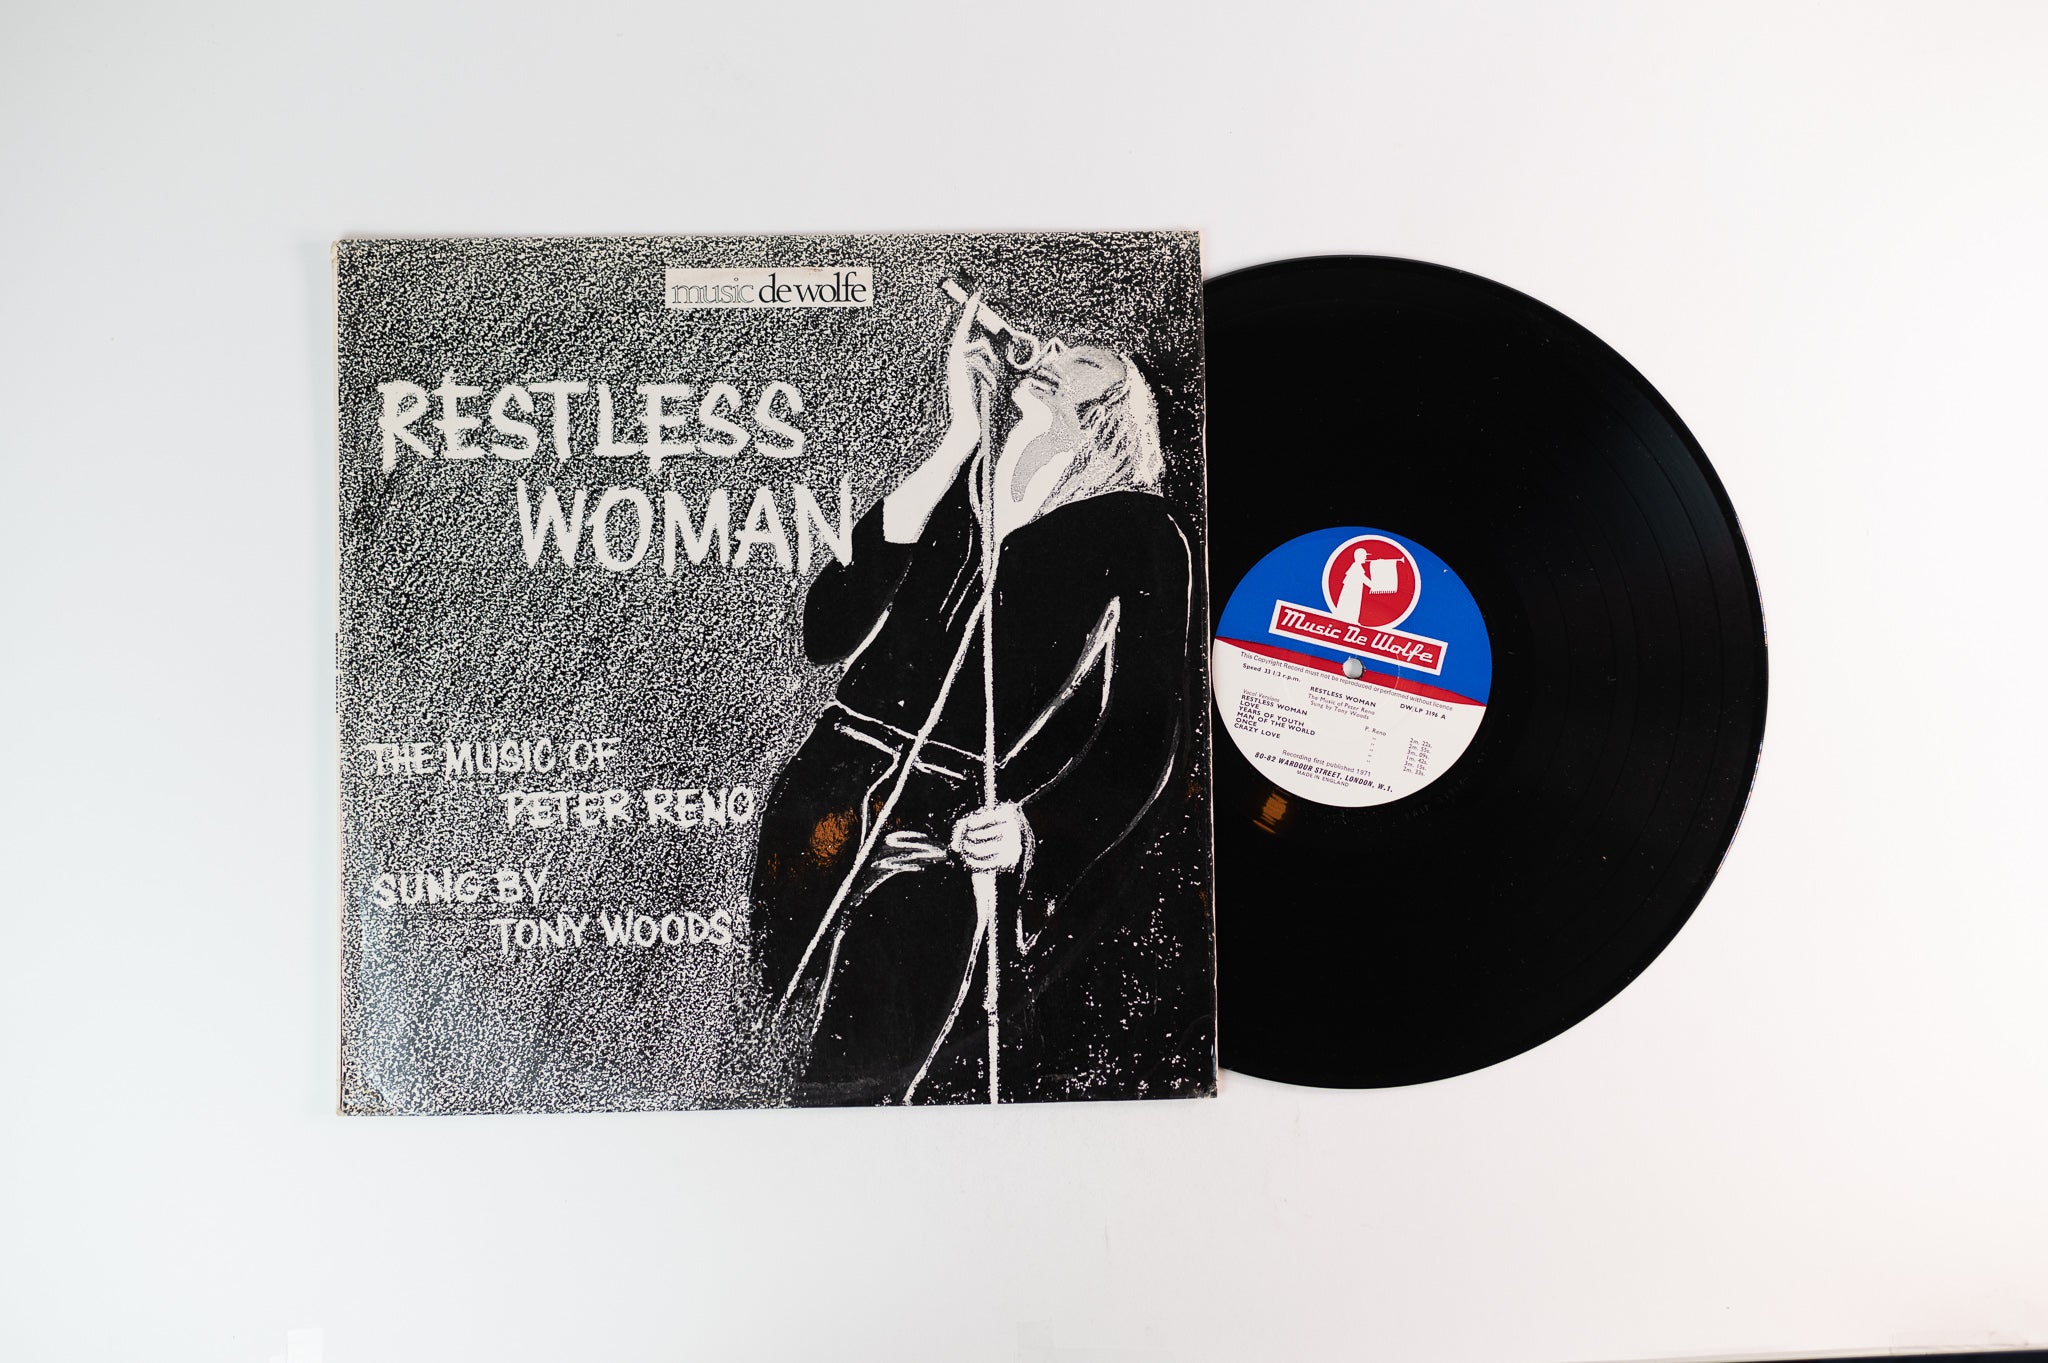 Peter Reno & Tony Woods - Restless Woman on Music De Wolfe